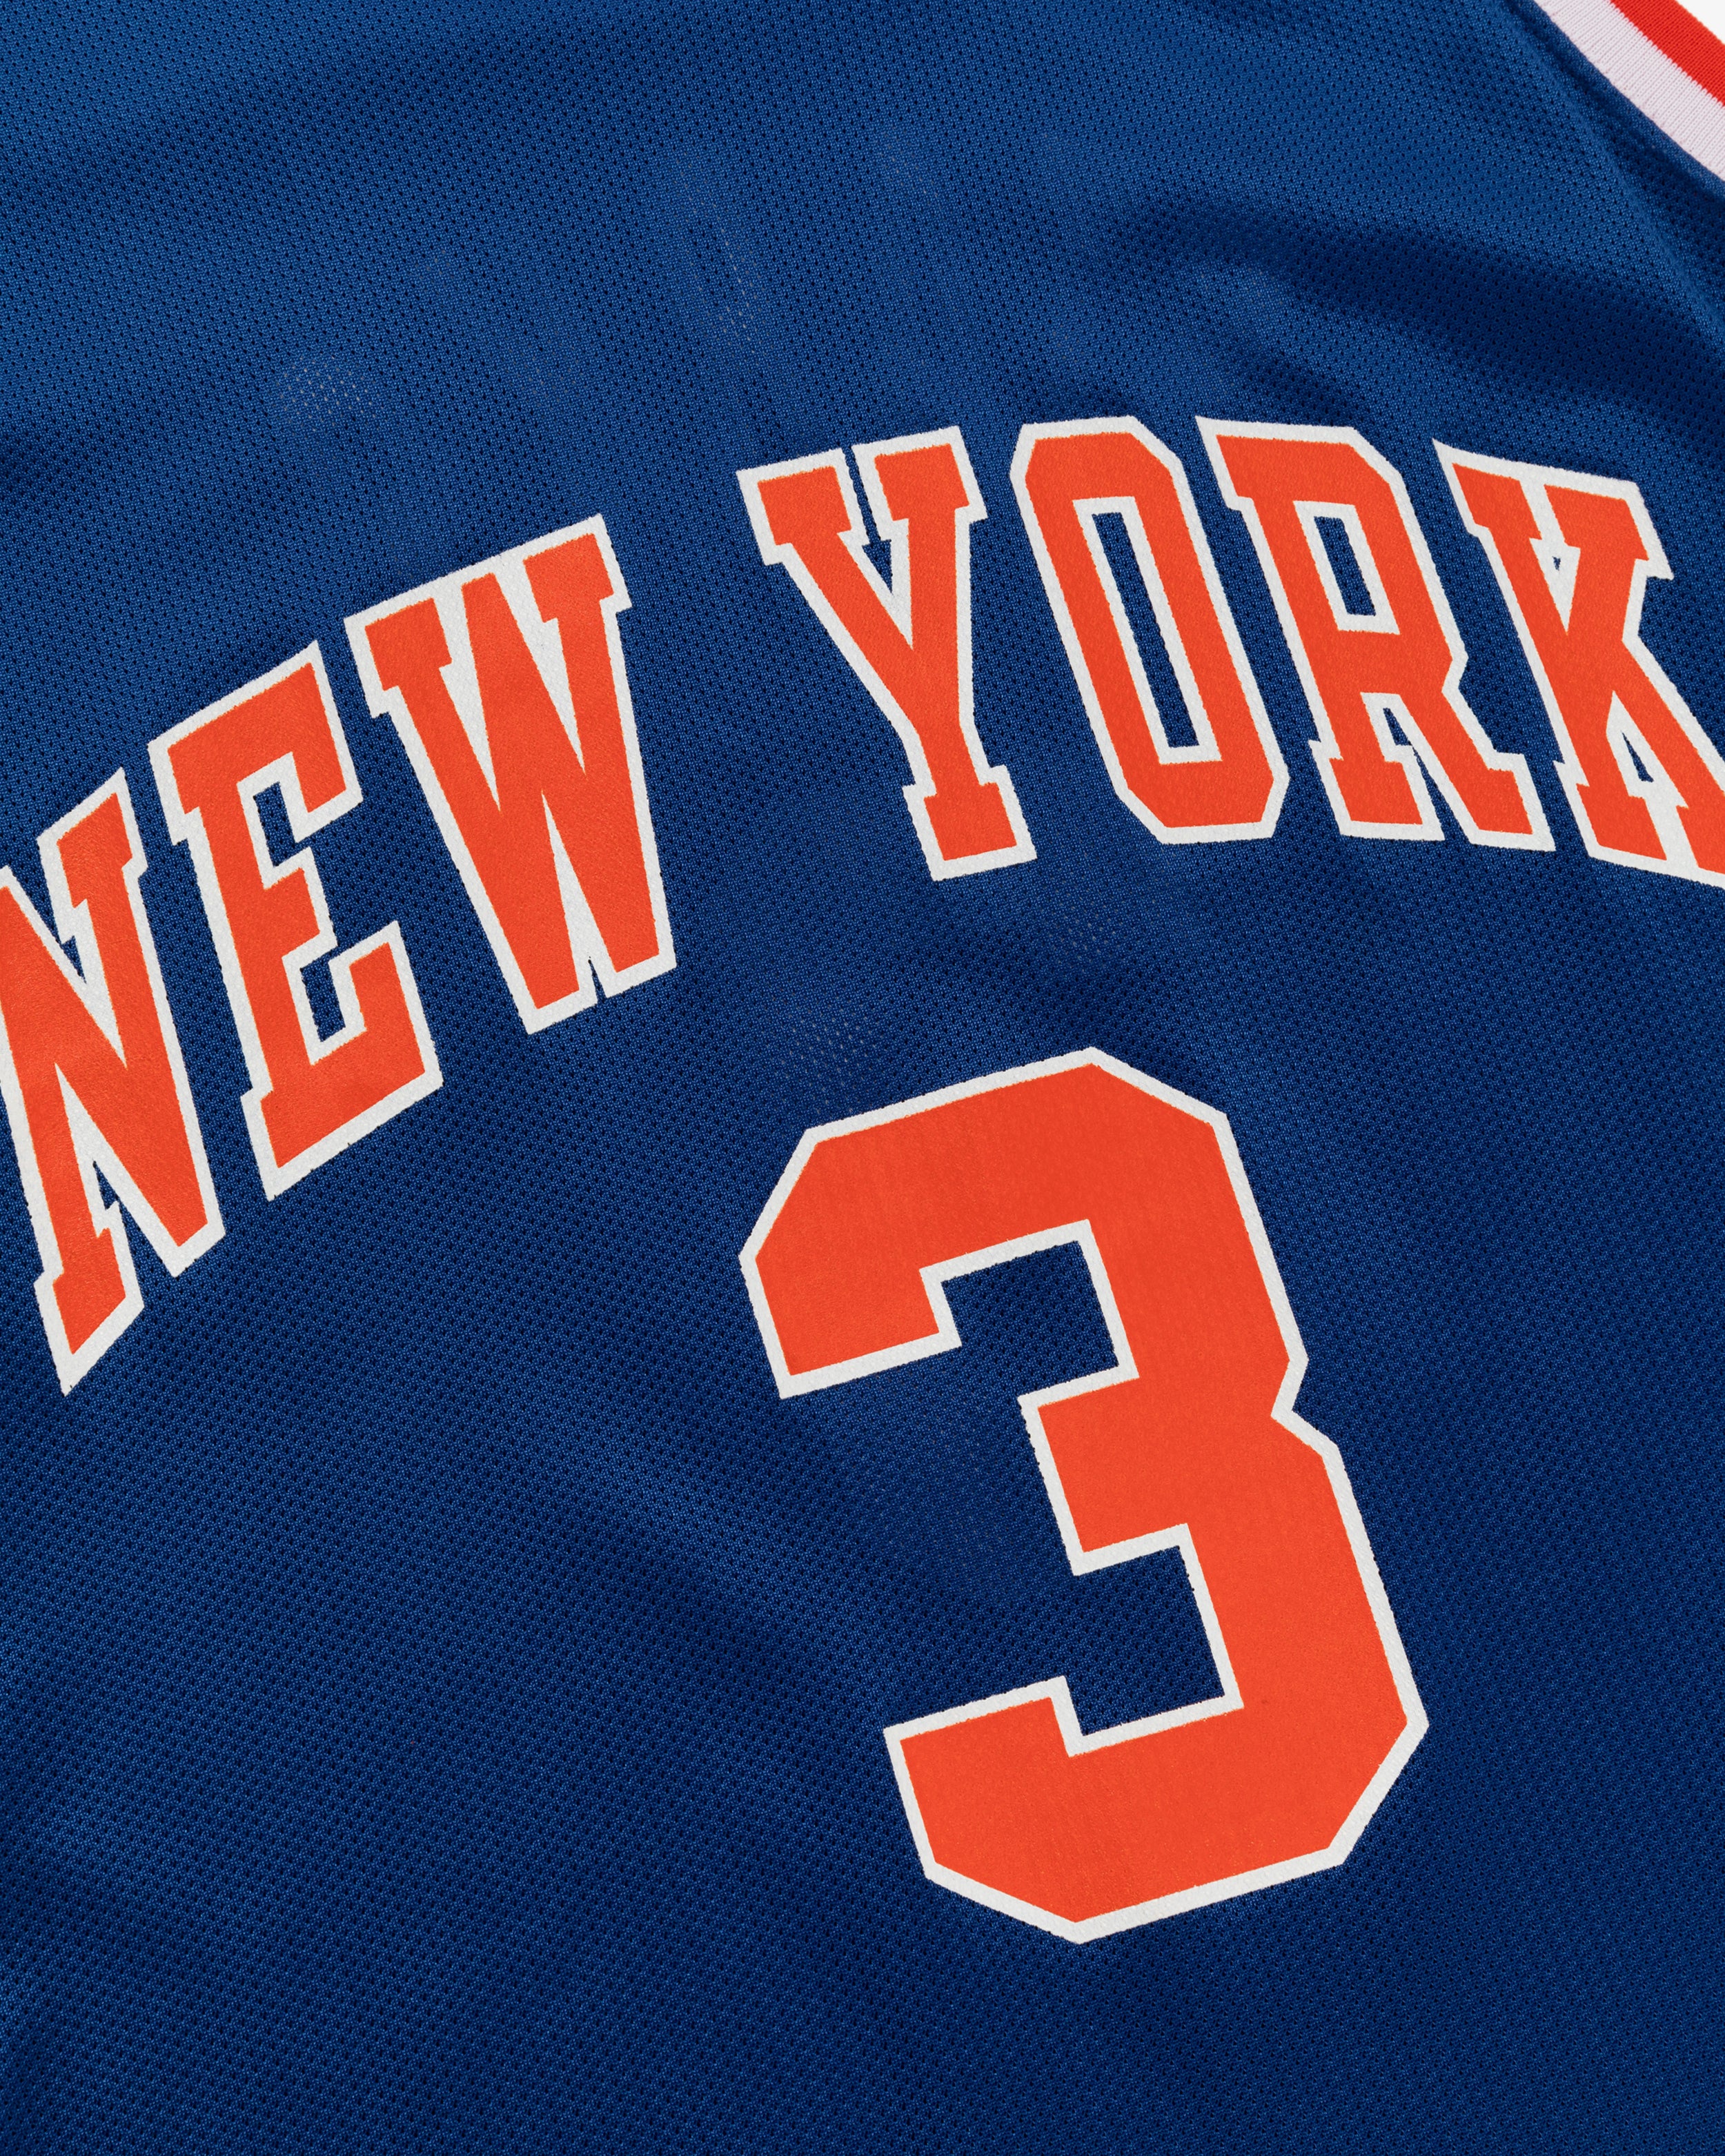 New York Knicks John Starks Jersey at